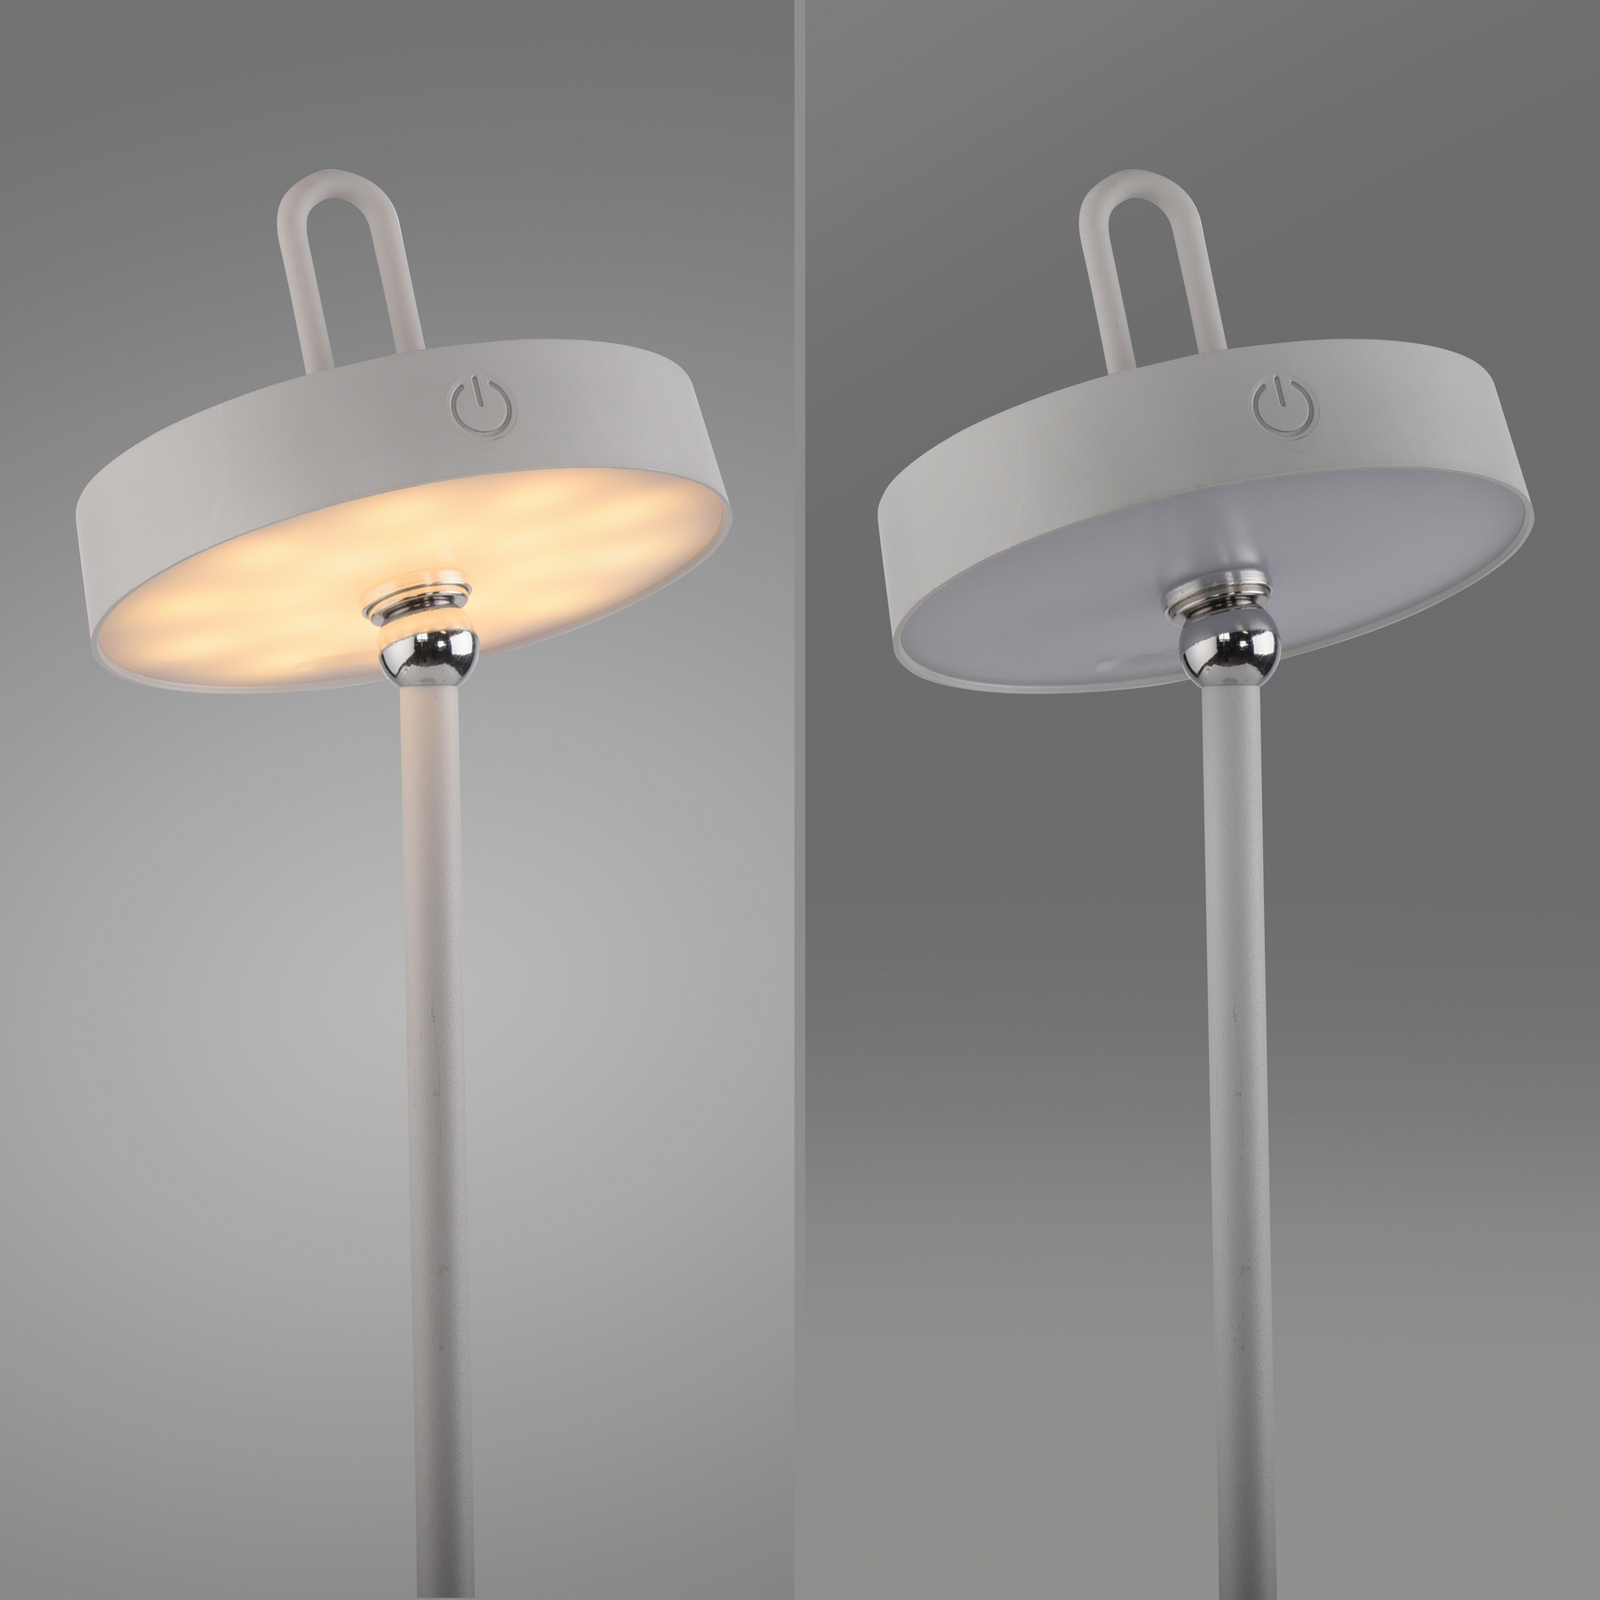 JUST LIGHT. LED tafellamp Amag grijs-beige ijzer IP44